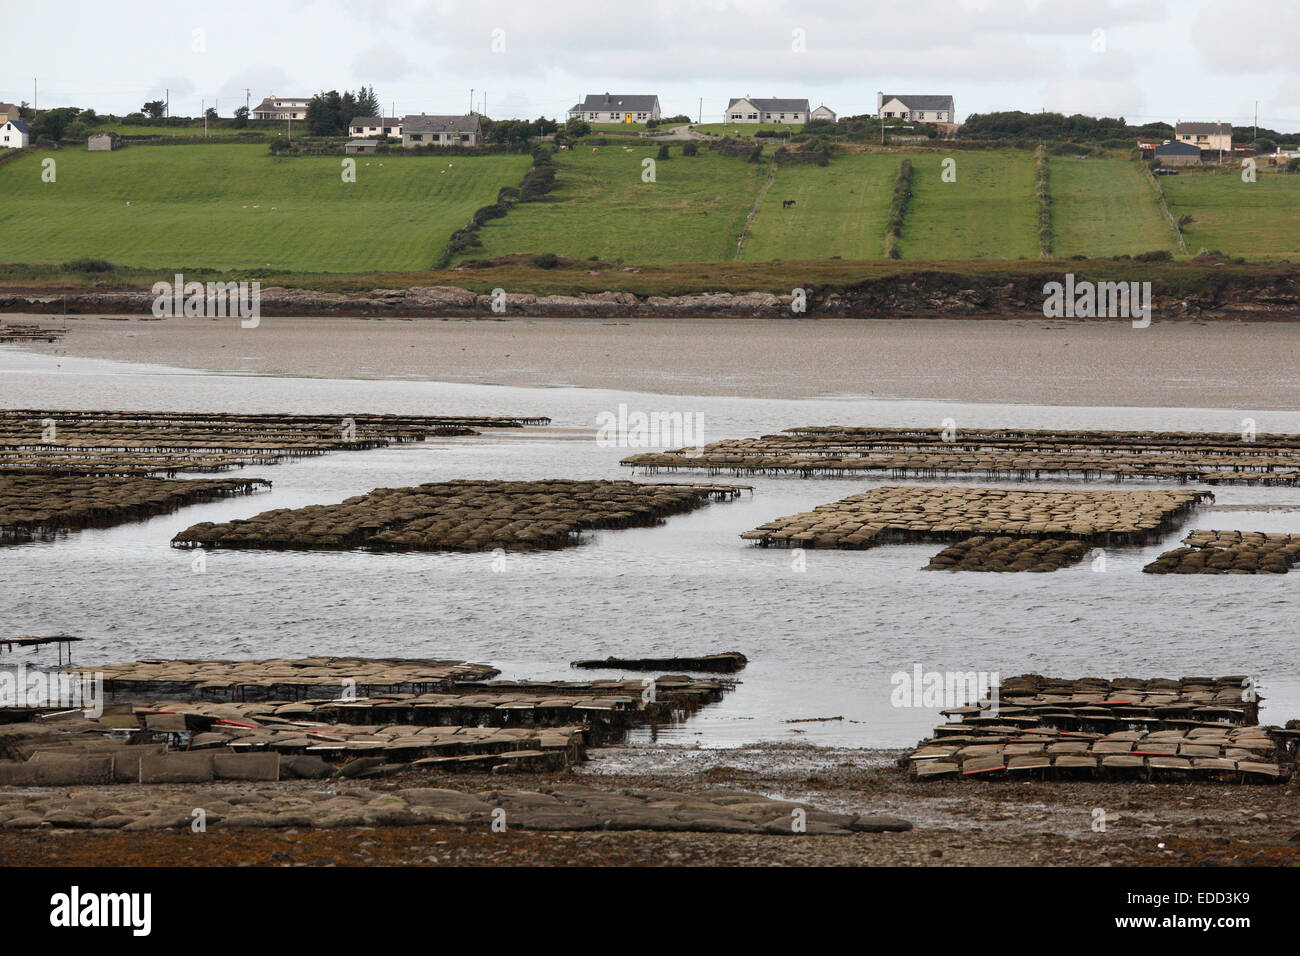 oyster farming in the Loughros Bay near Ardara, County Donegal, Ireland Stock Photo